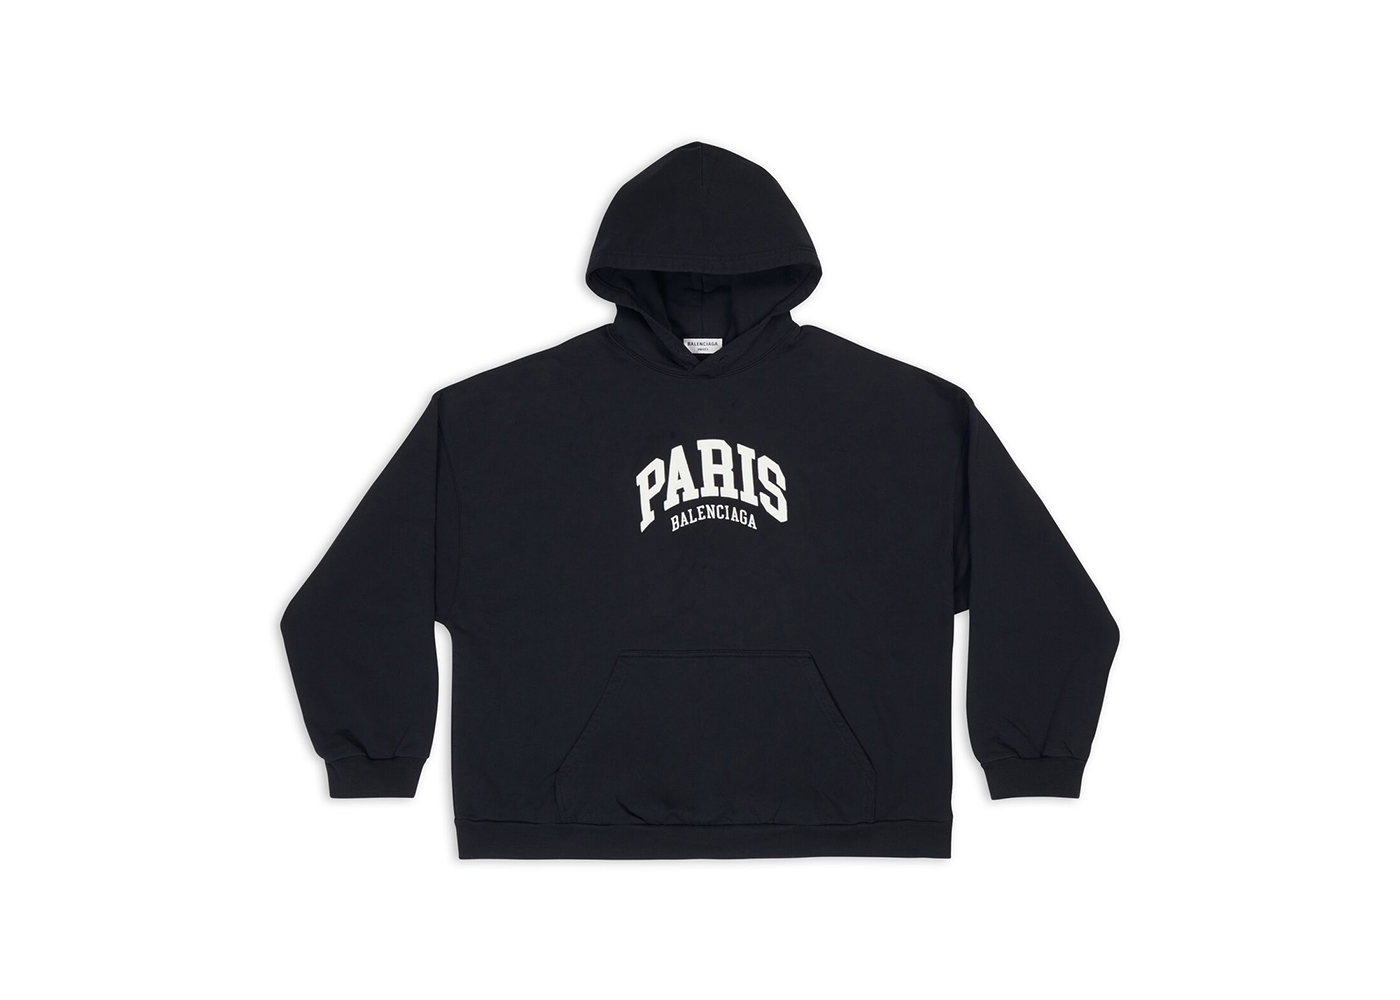 Paris Moon Outerwear Zip-up Hoodie Oversized in Black Faded